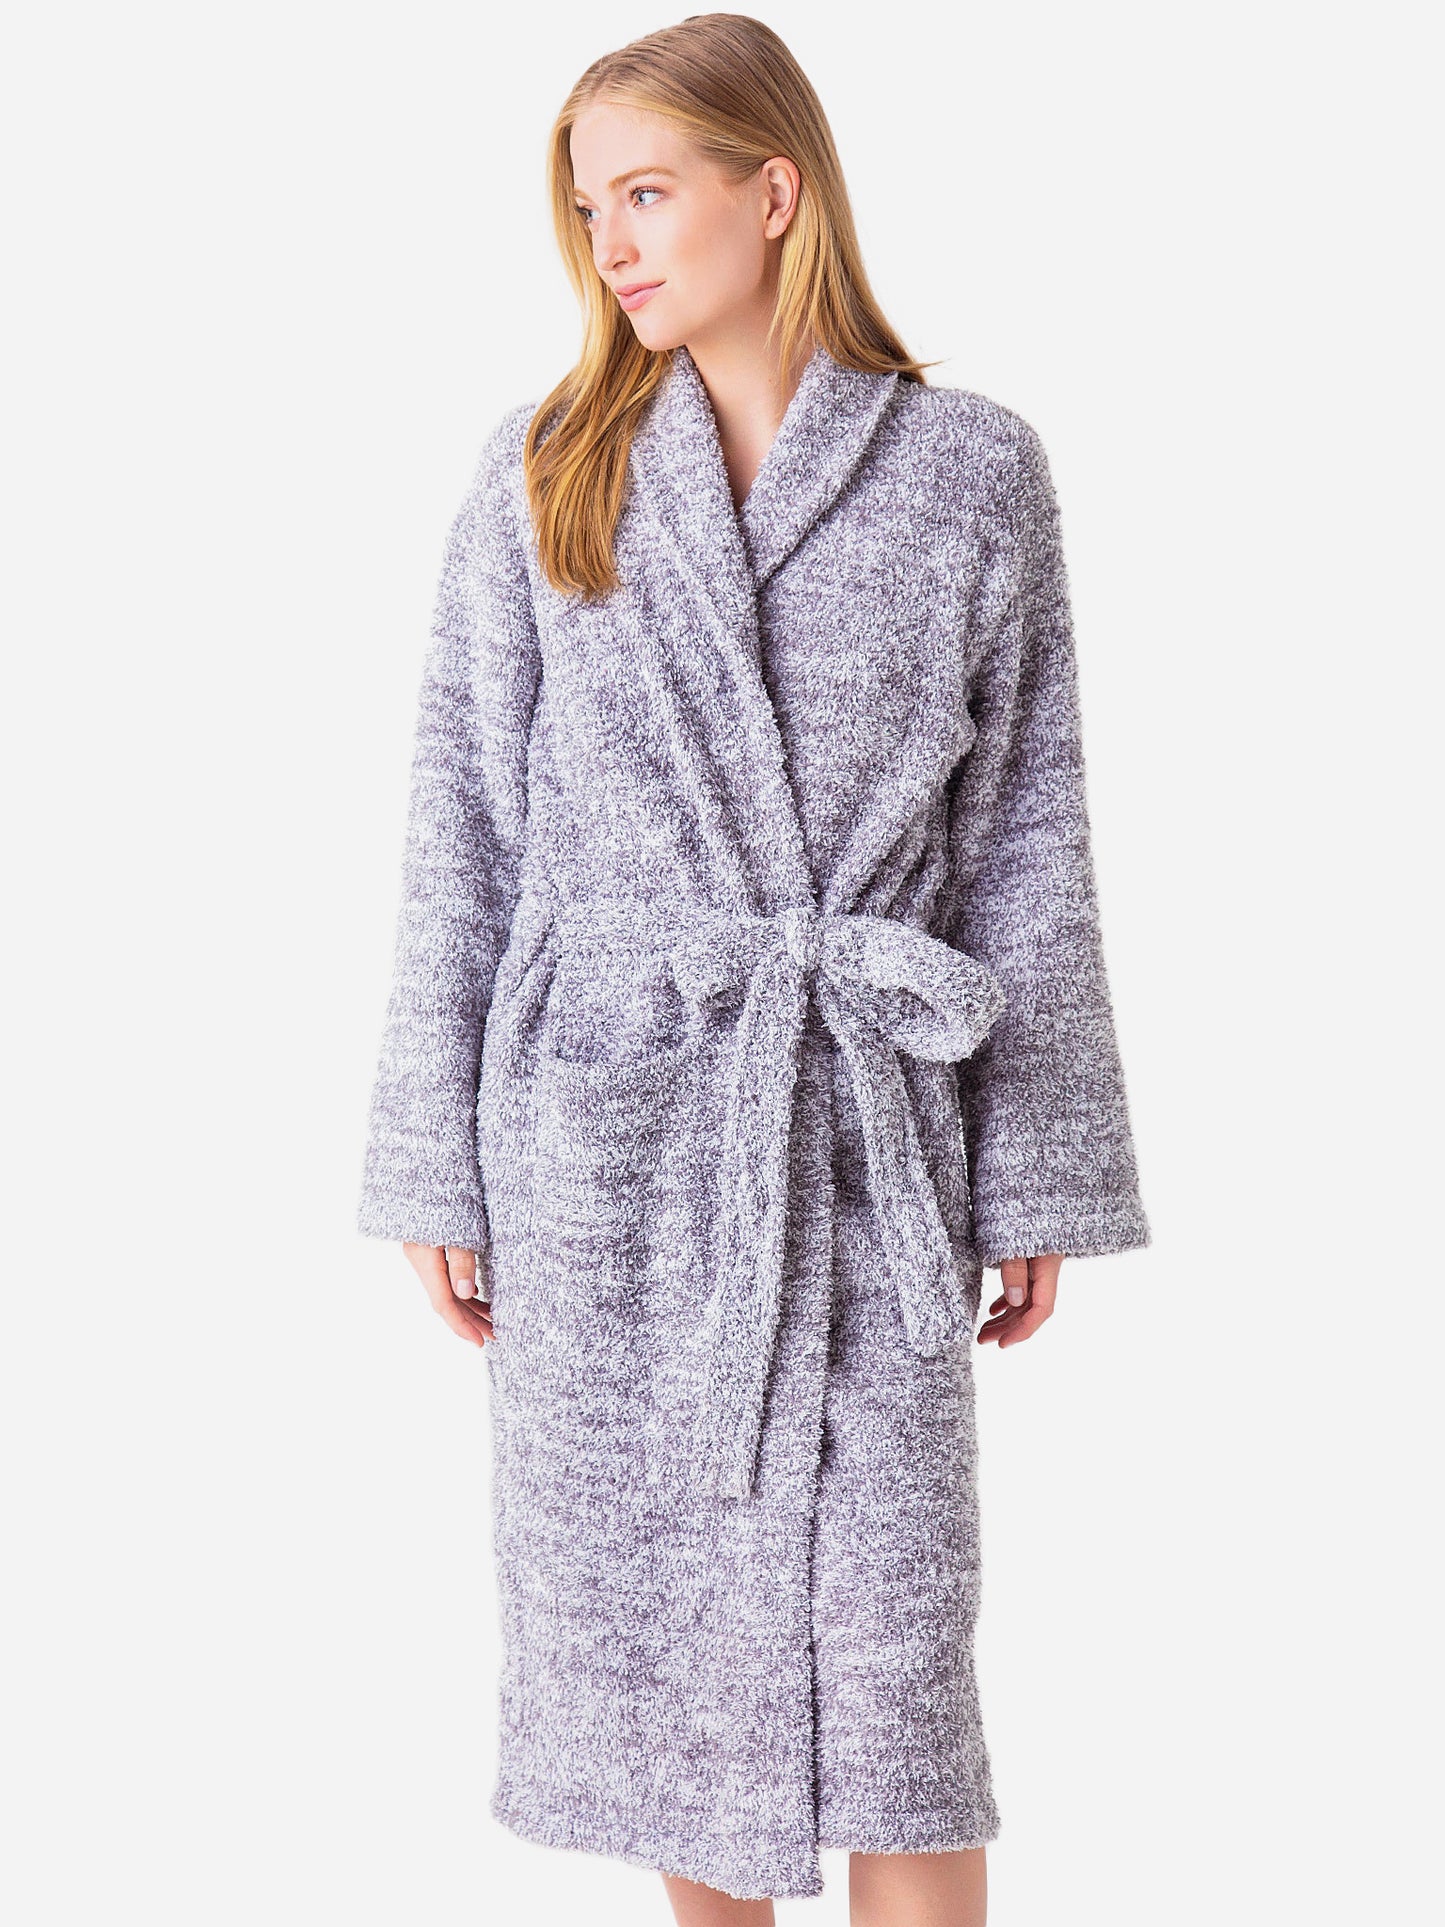 Barefoot Dreams Women's CozyChic® Heathered Robe